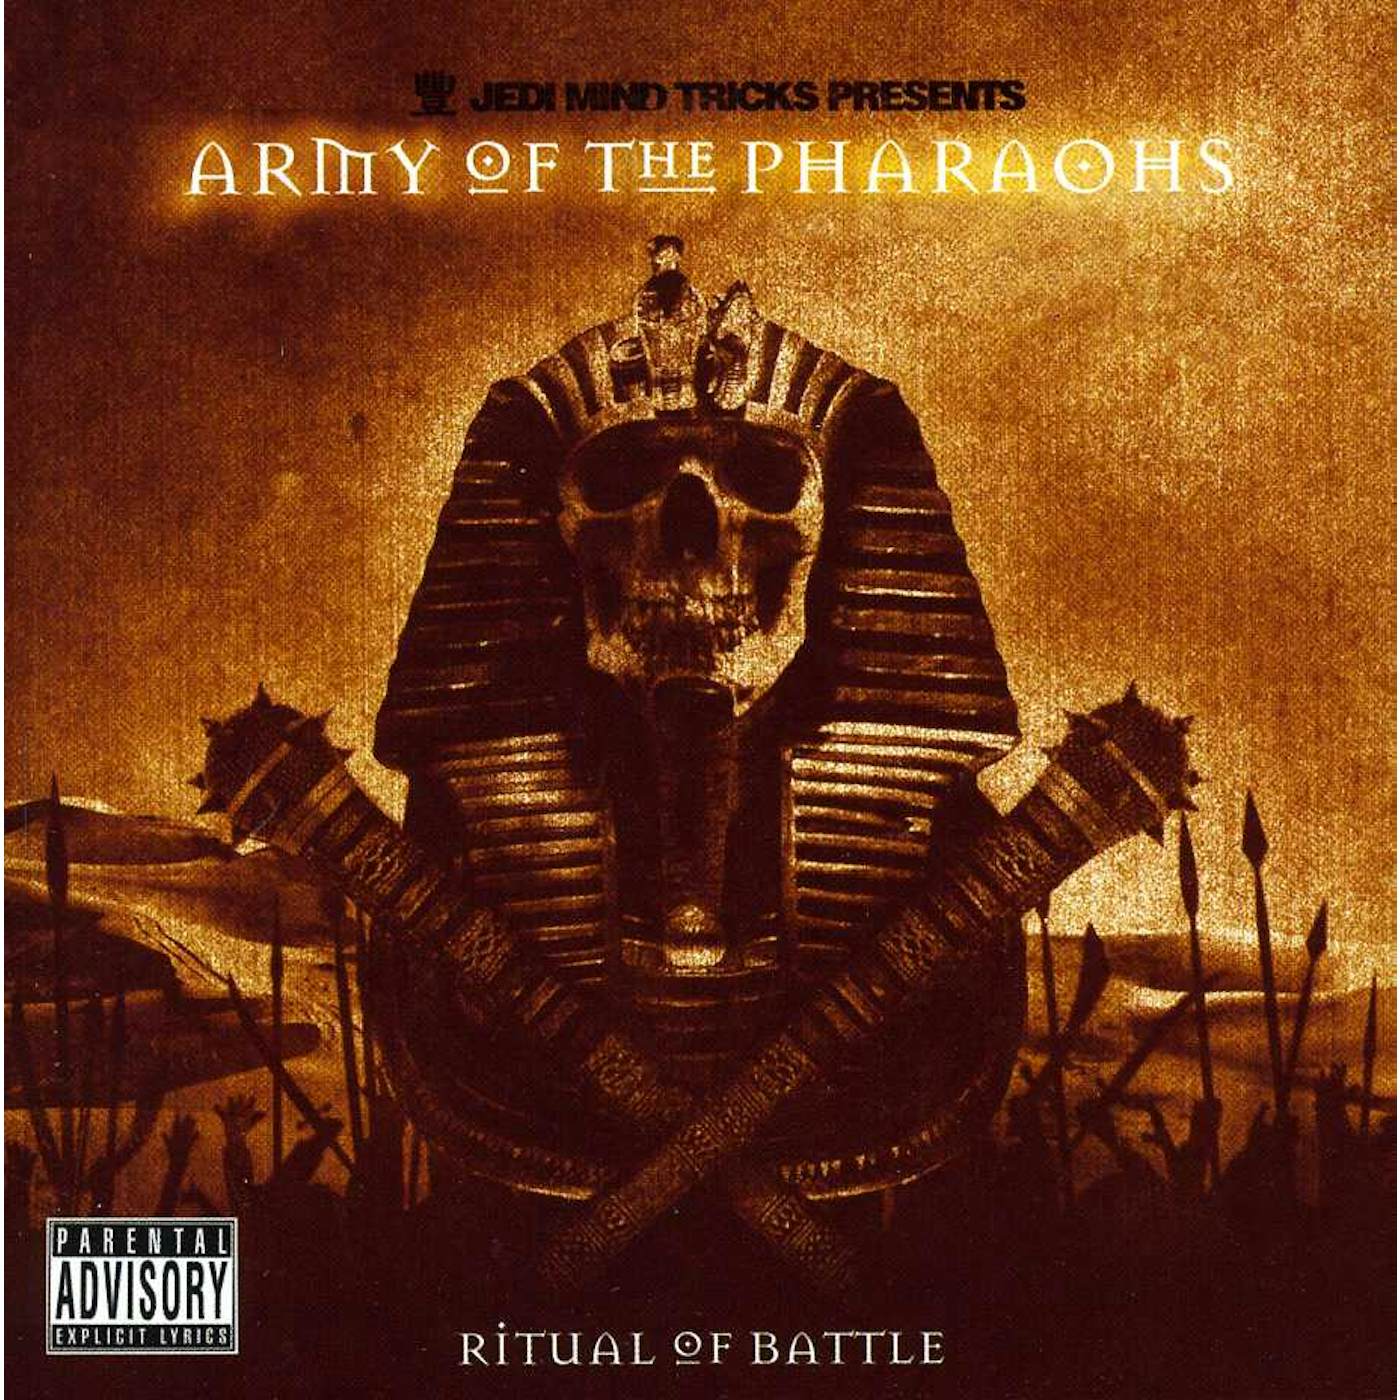 Jedi Mind Tricks ARMY OF THE PHAROAHS: RITUAL OF BATTLE CD